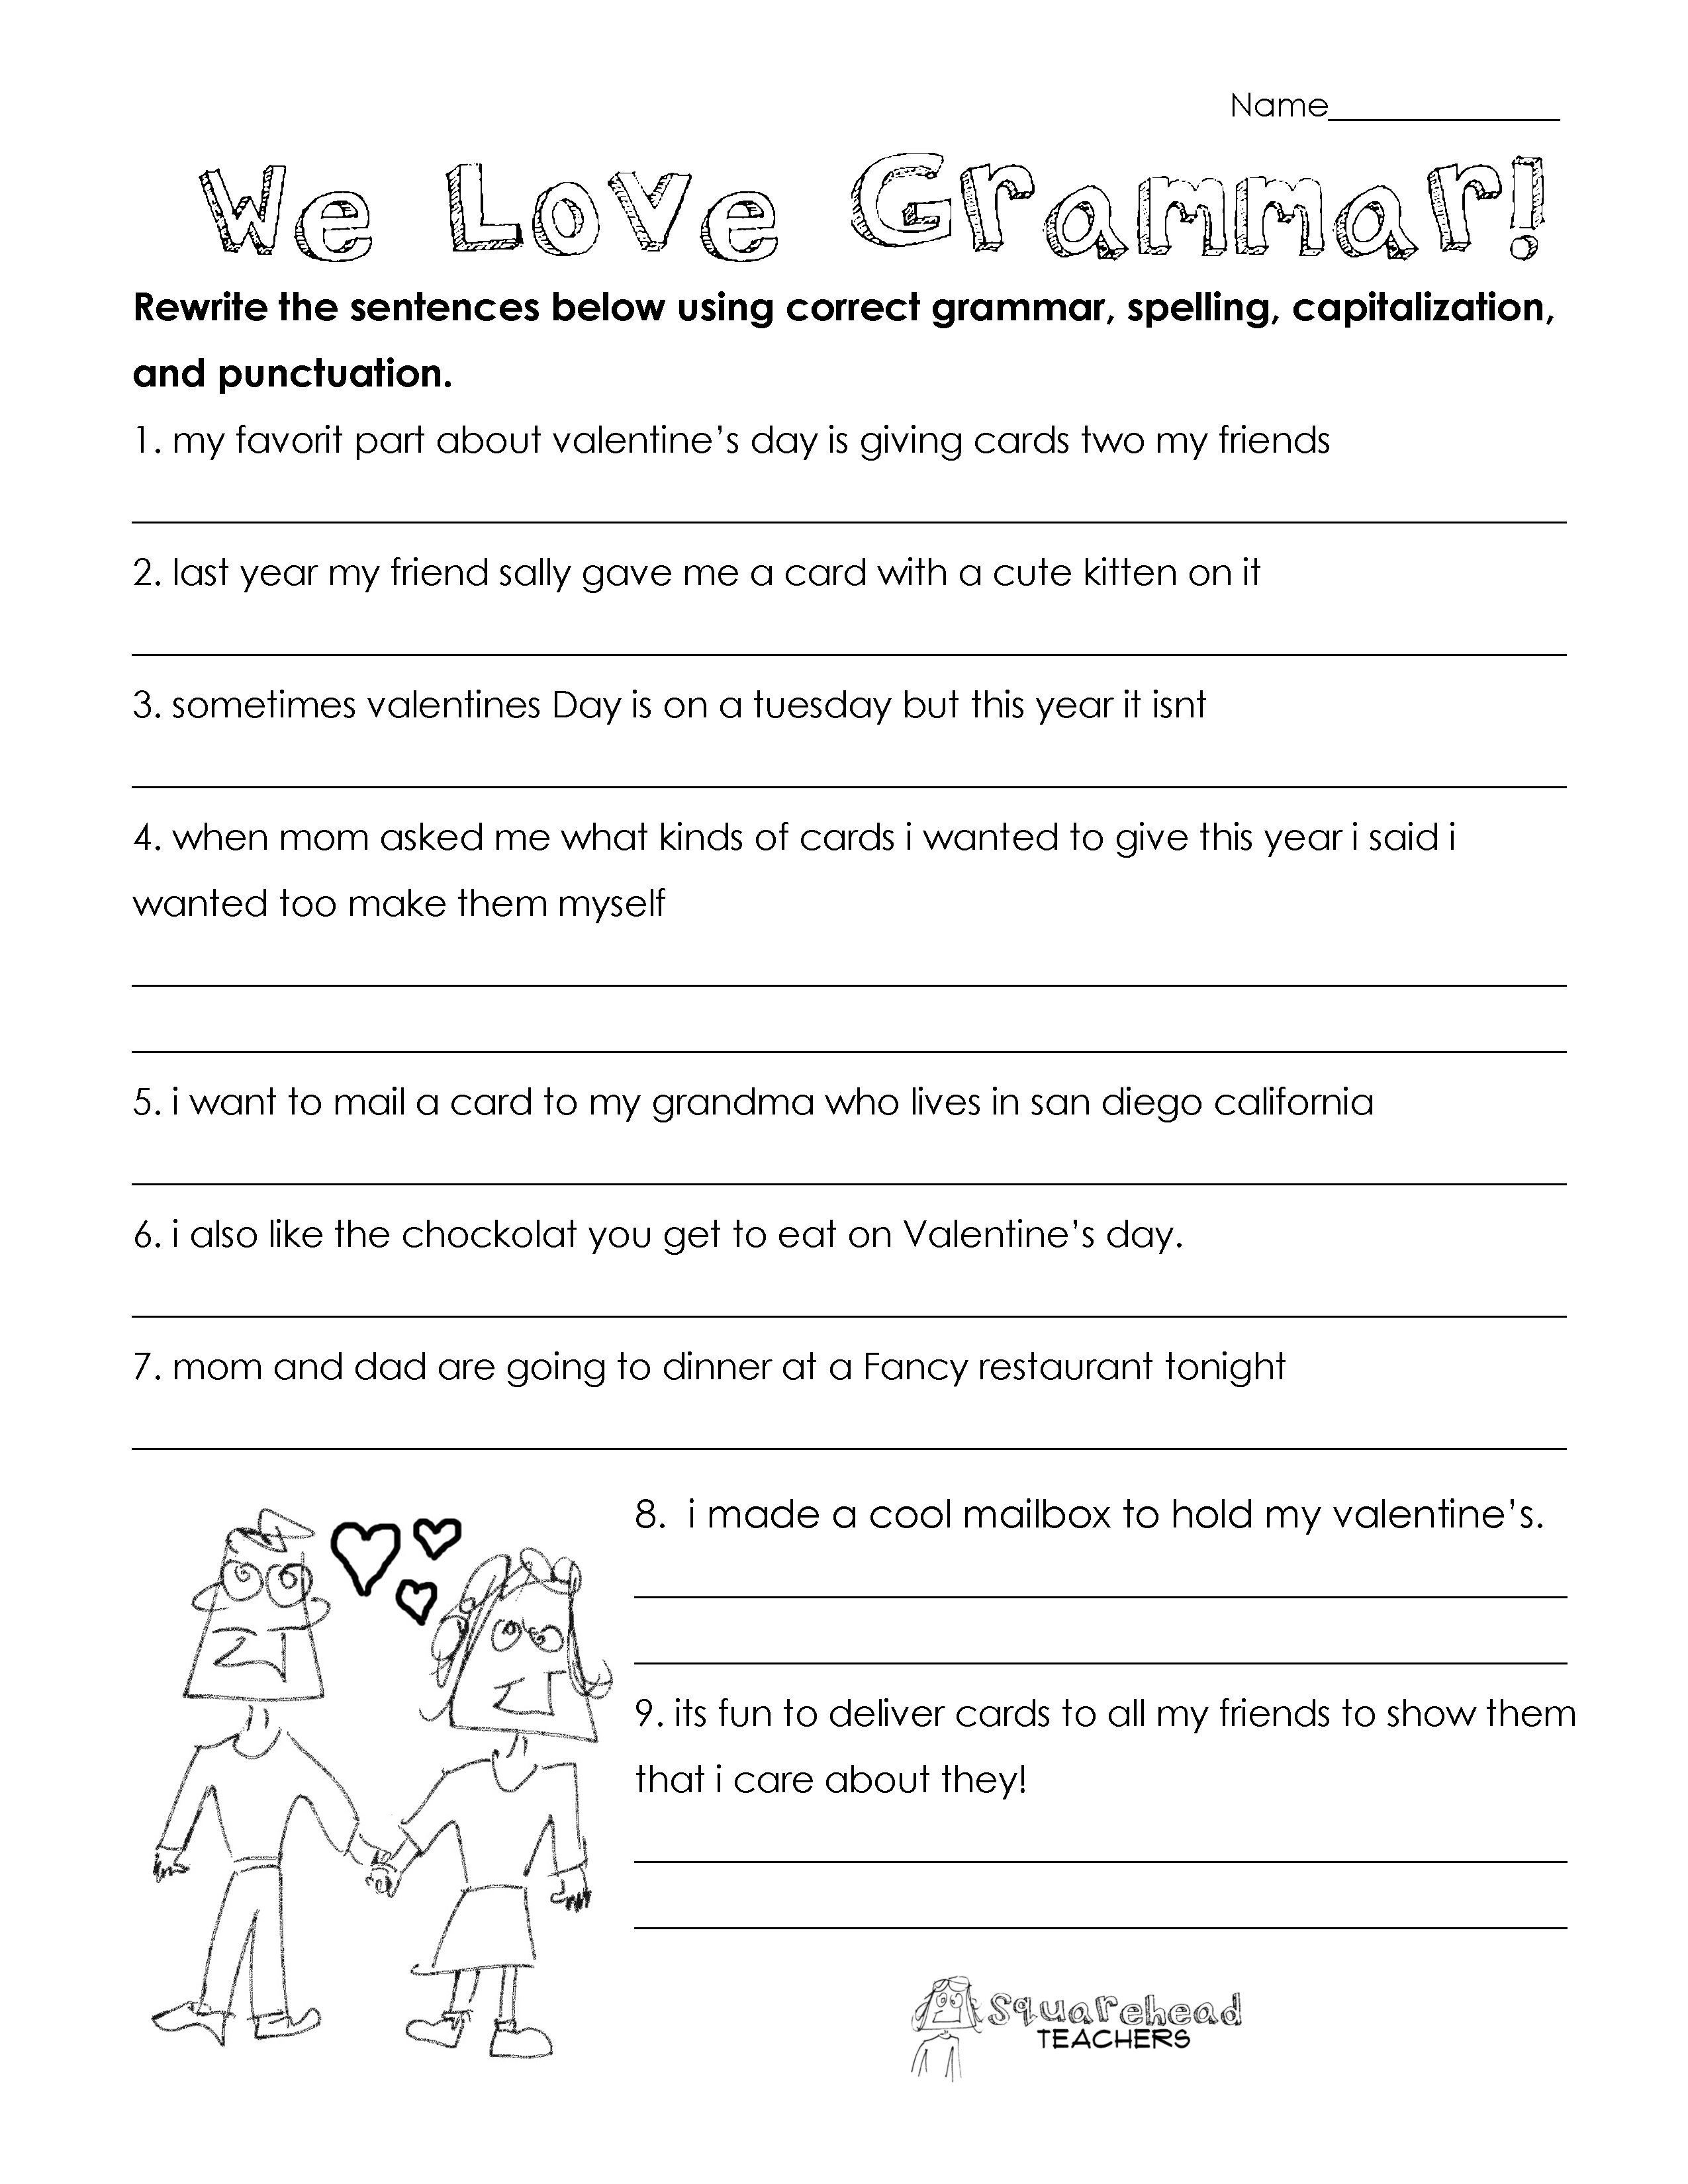 Free 3rd Grade Grammar Worksheets Image